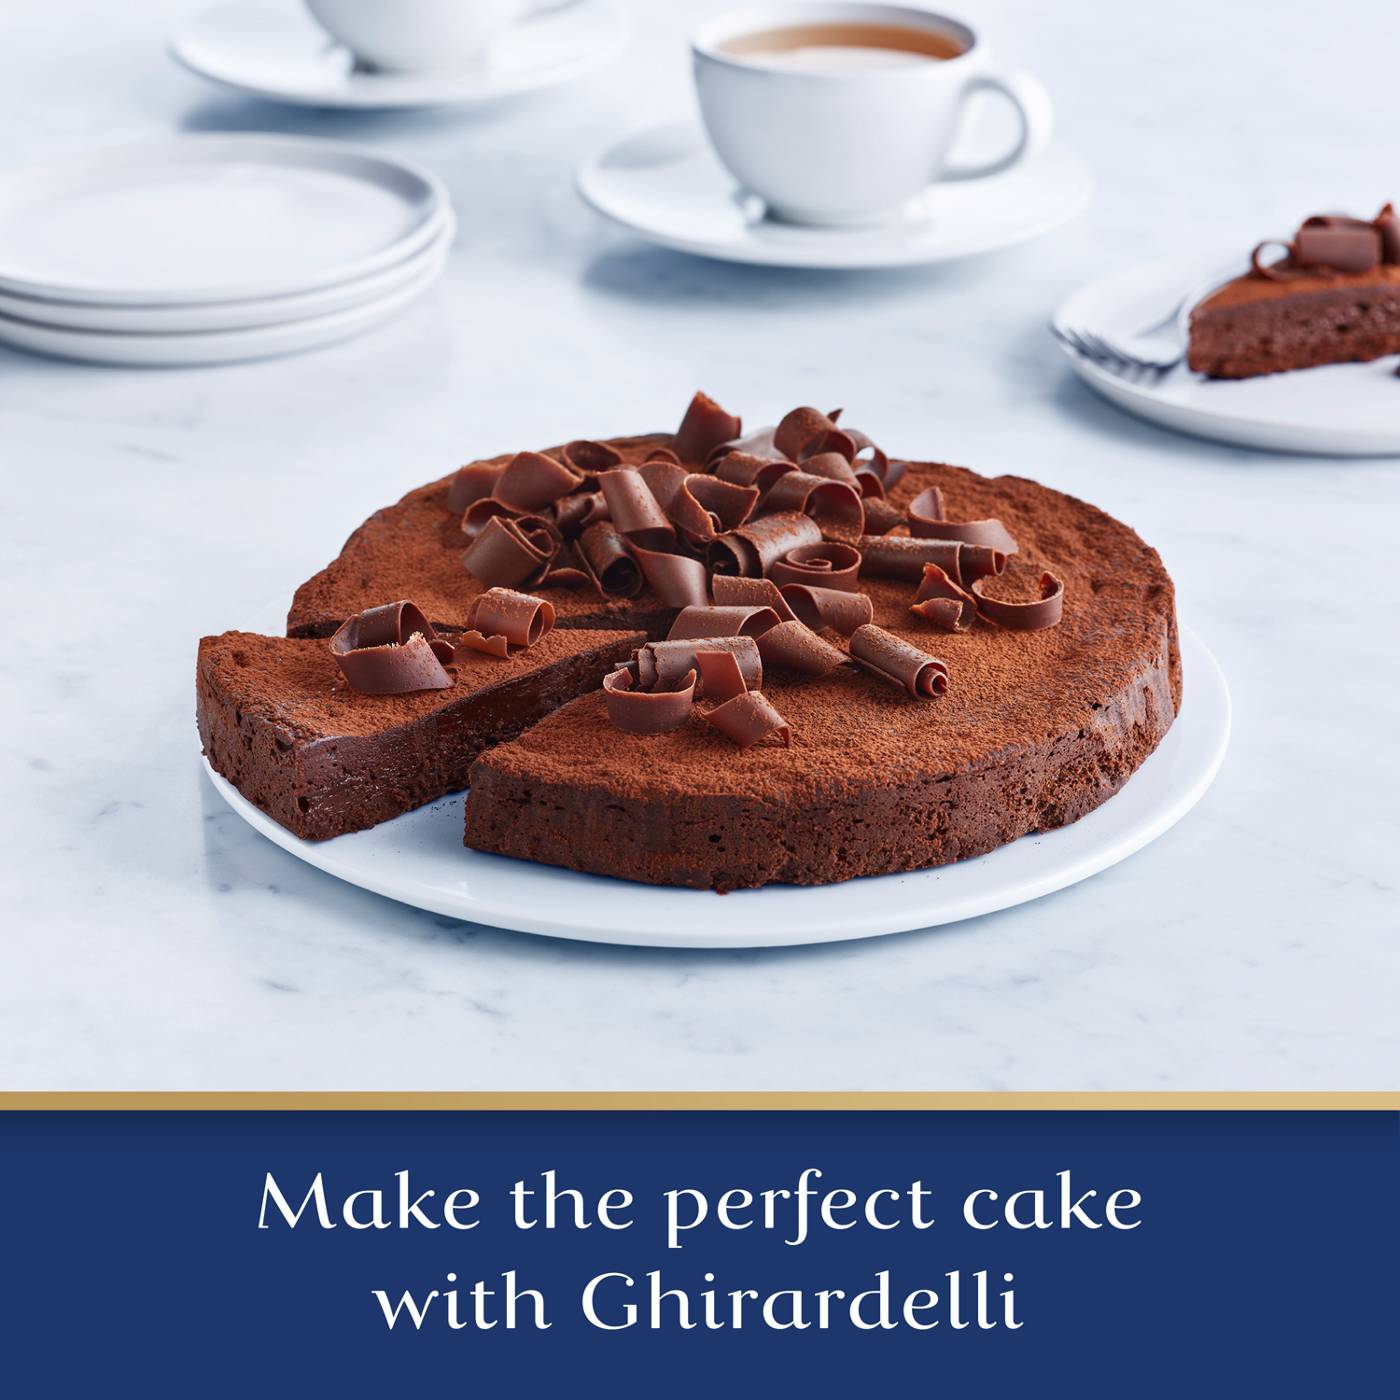 Ghirardelli Premium Baking Bar Semi-Sweet Chocolate; image 4 of 6